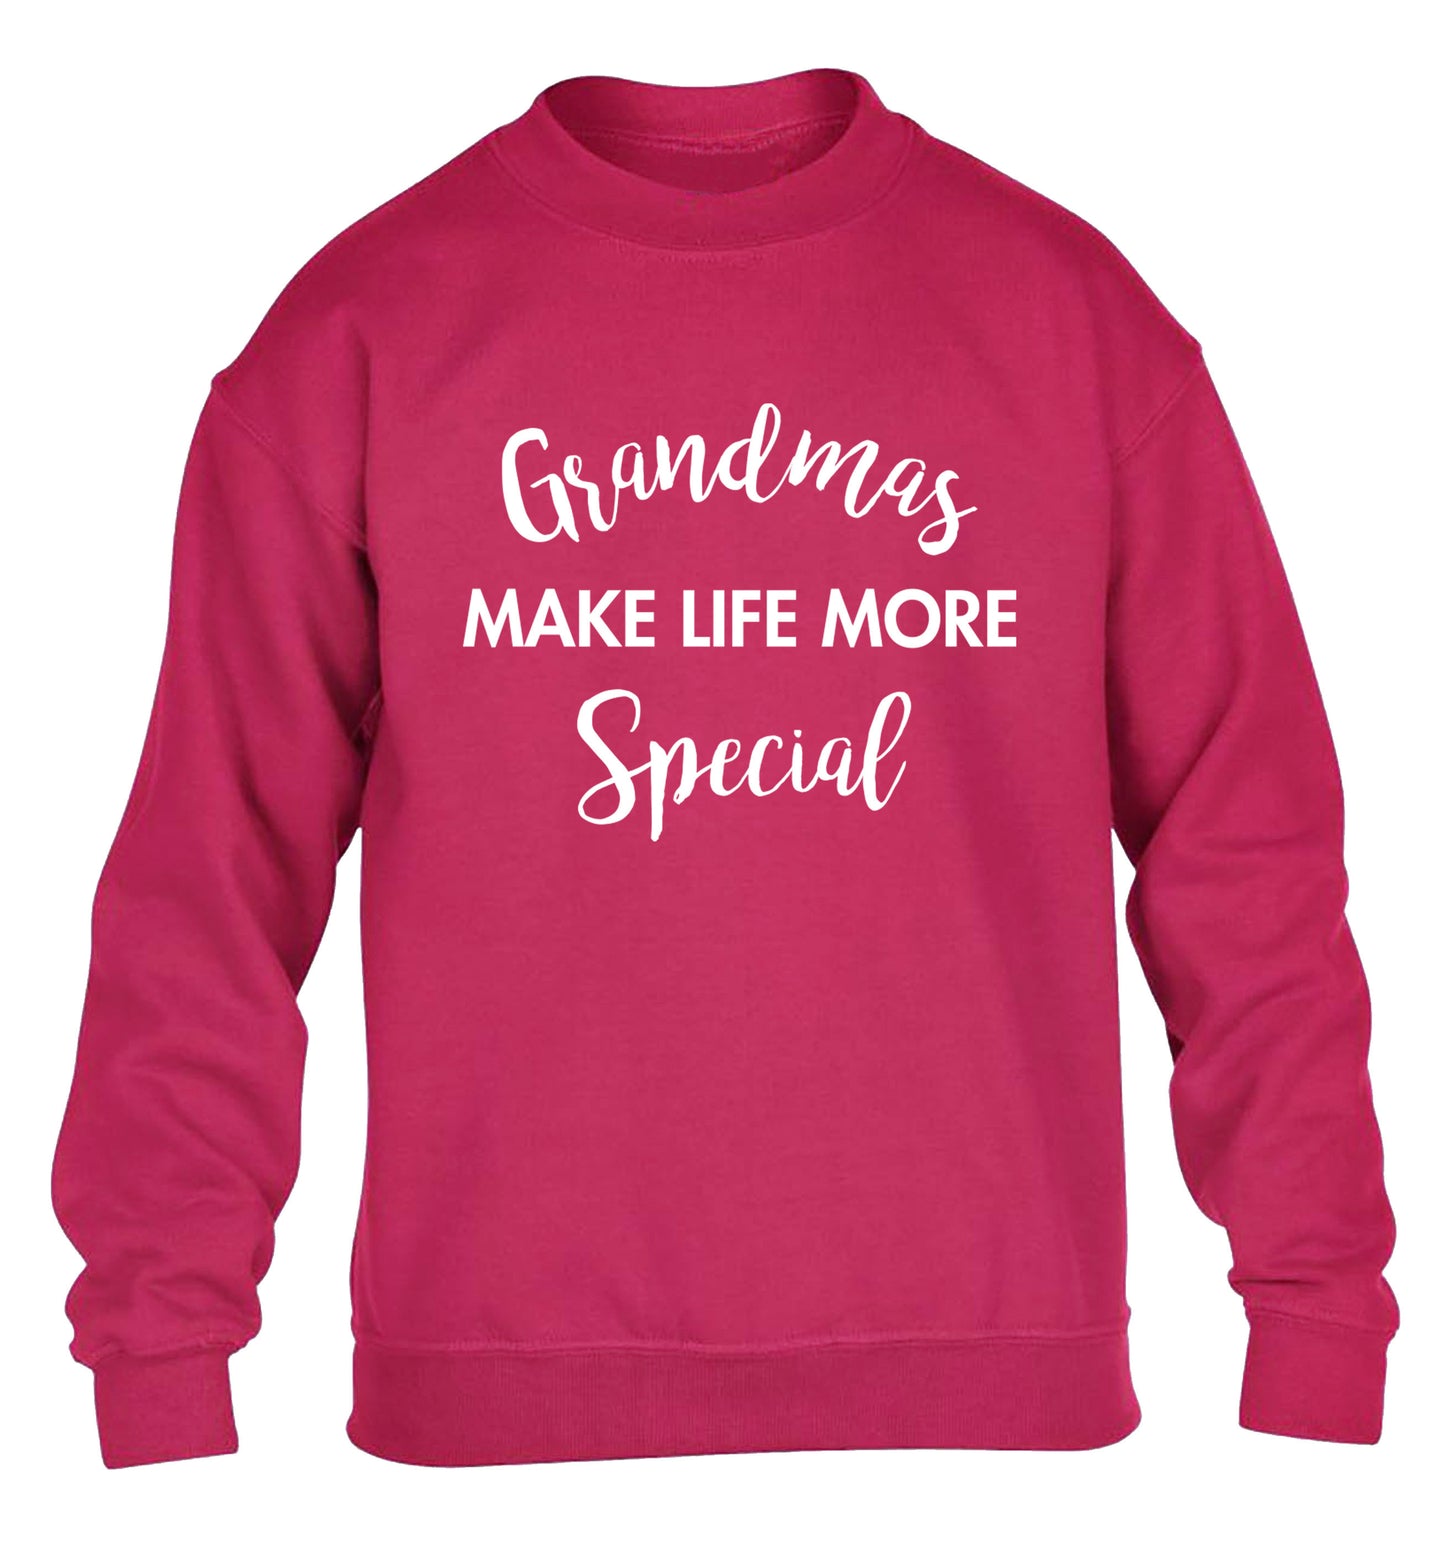 Grandmas make life more special children's pink sweater 12-14 Years